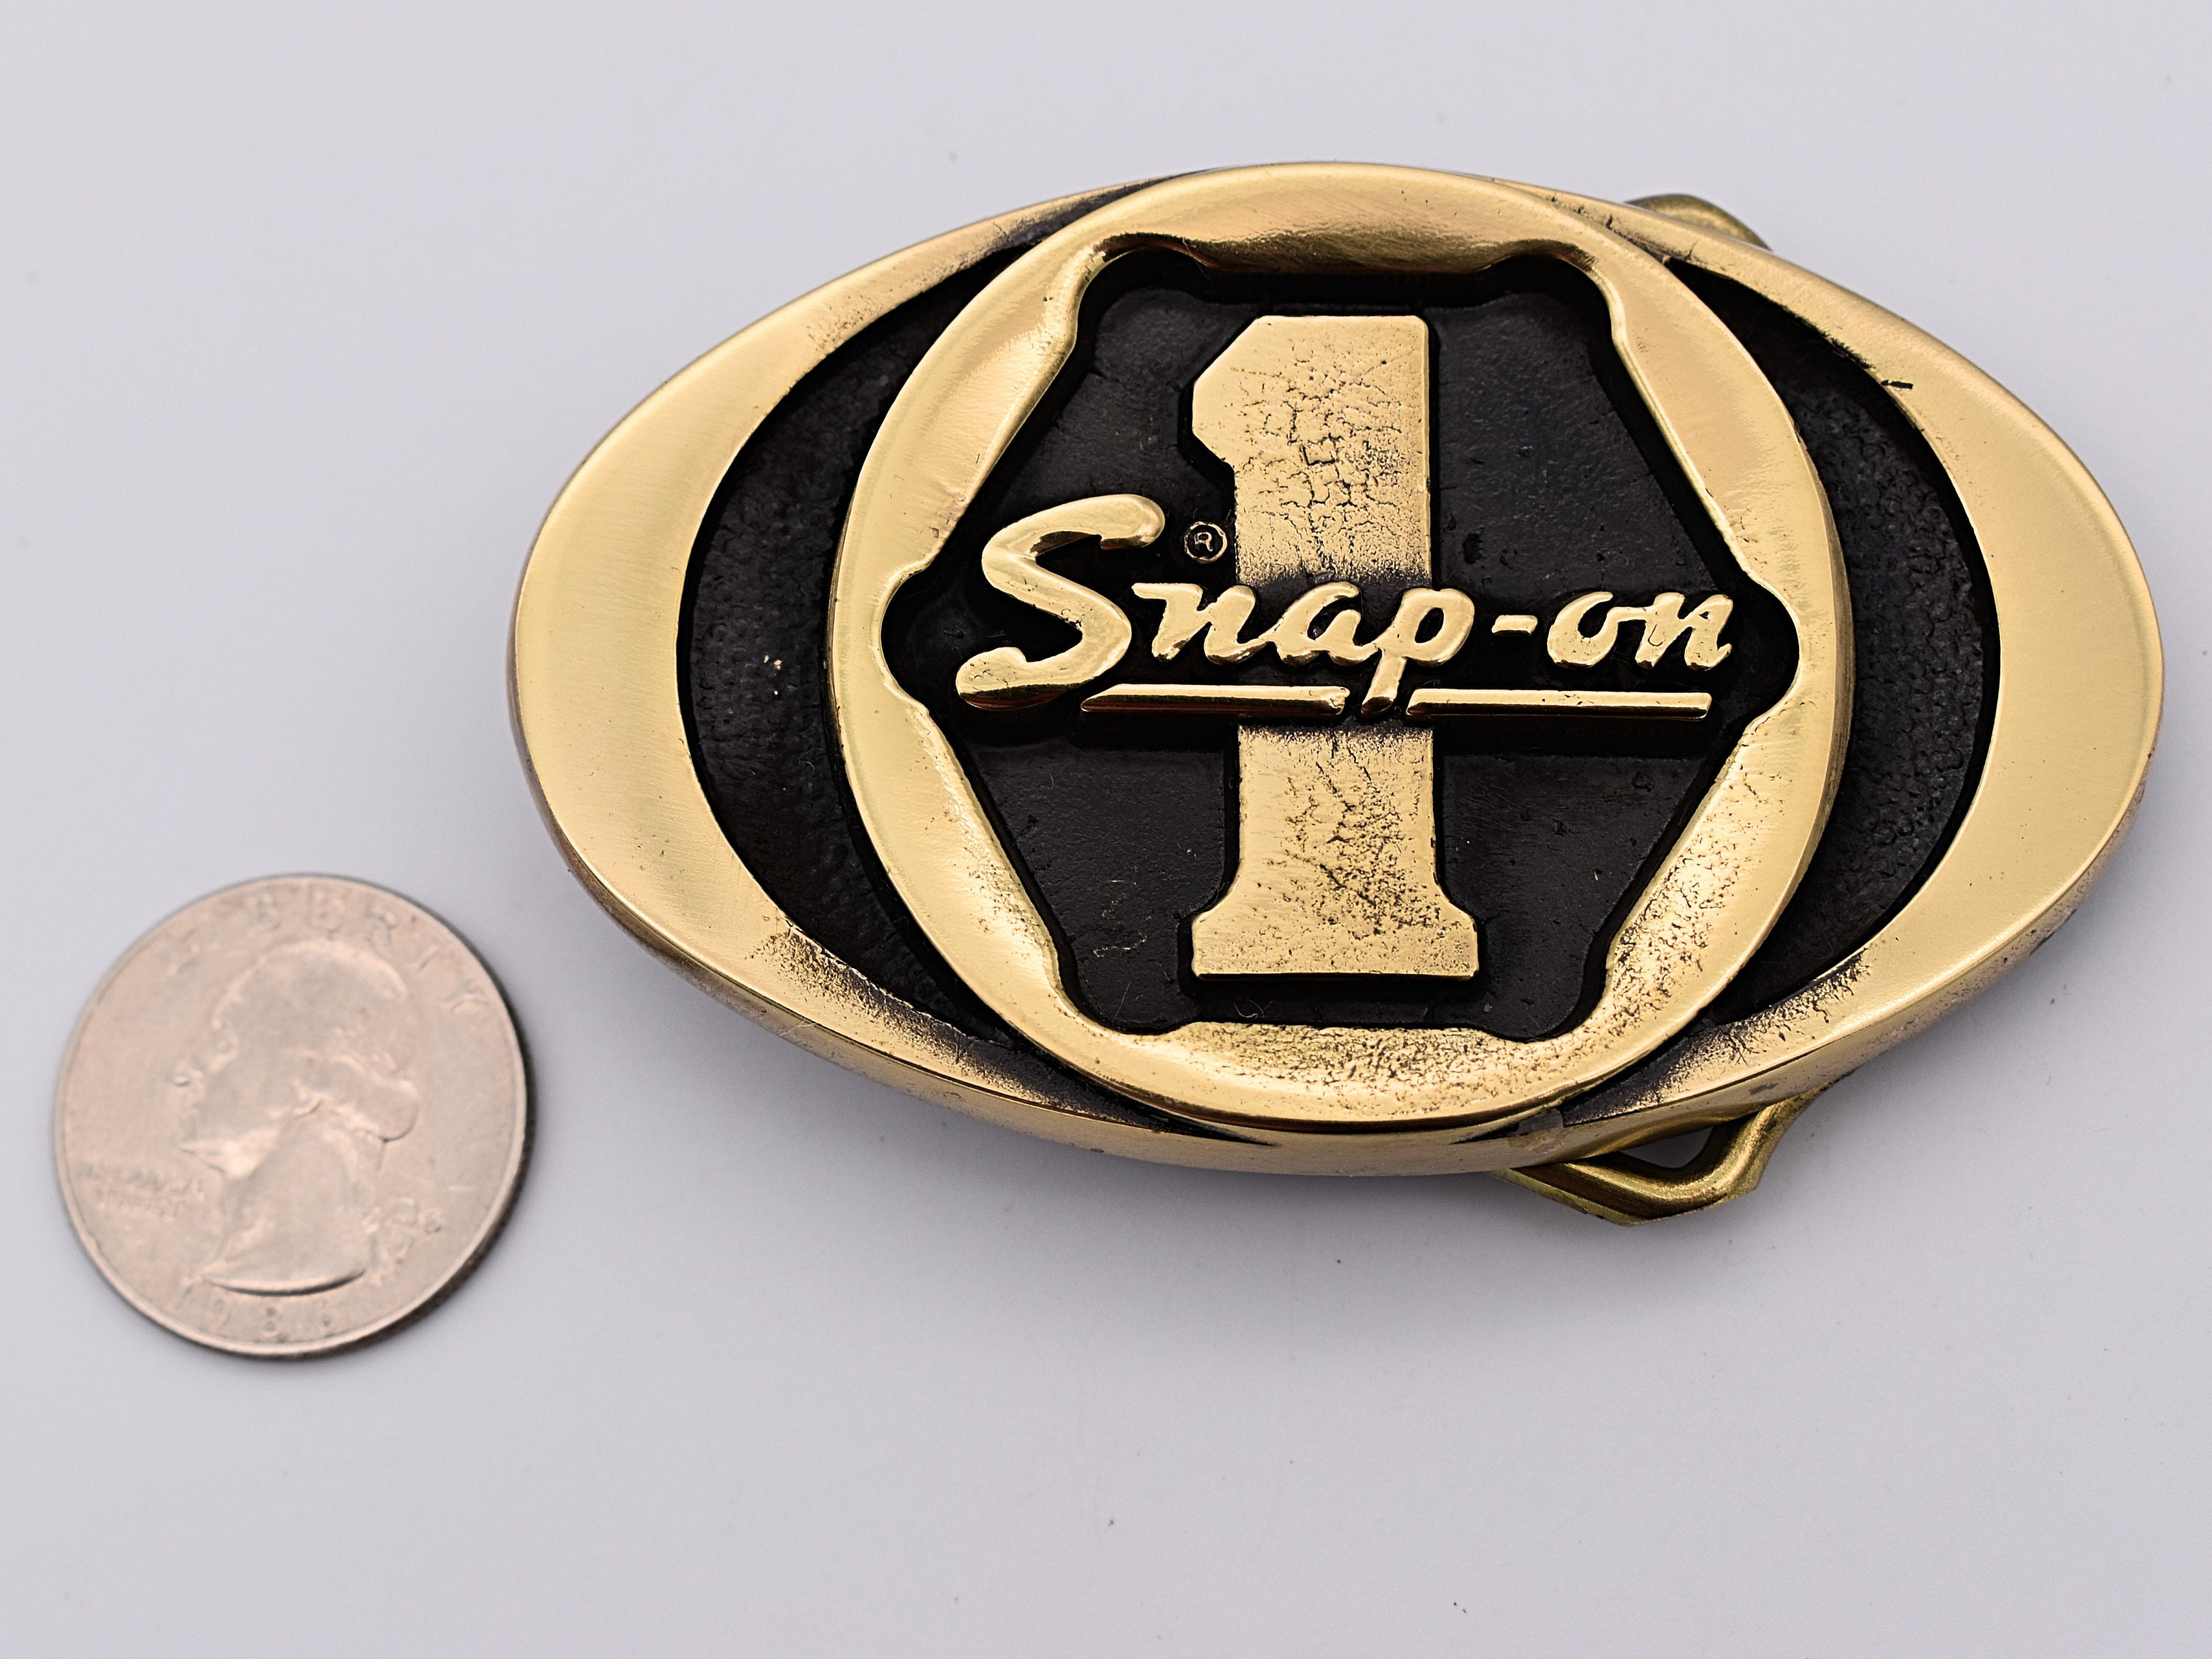 Snap-on Tools Vintage 1970's Solid Brass Socket 1 Belt Buckle Limited Edition #5 